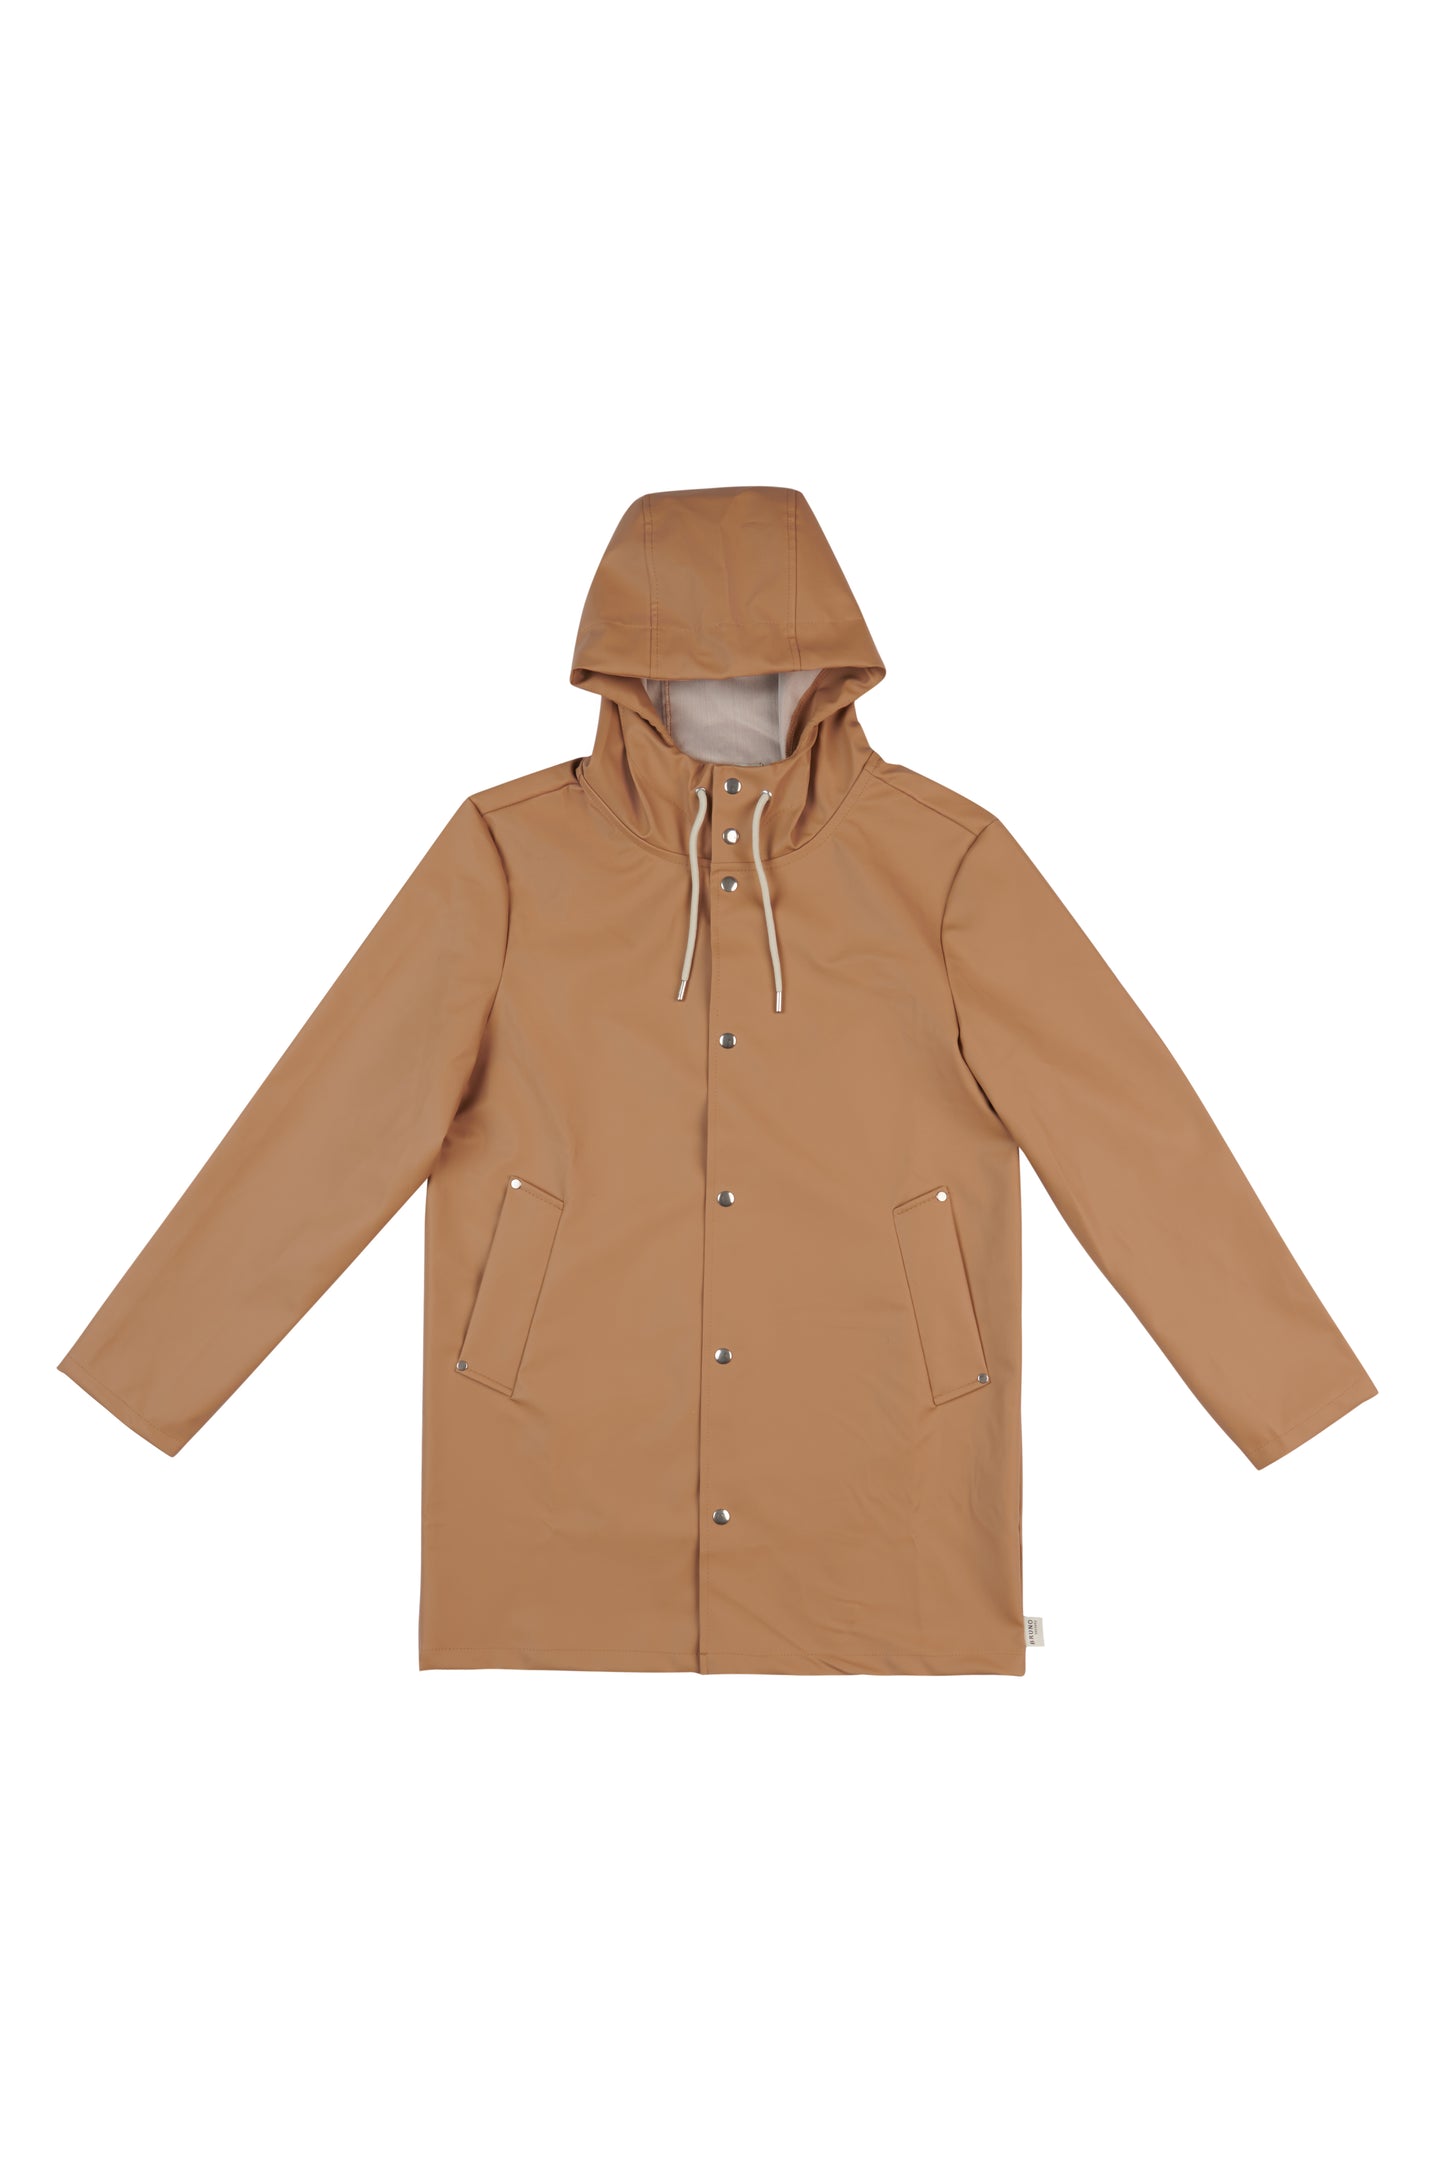 Matchy Raincoat - Cinnamon